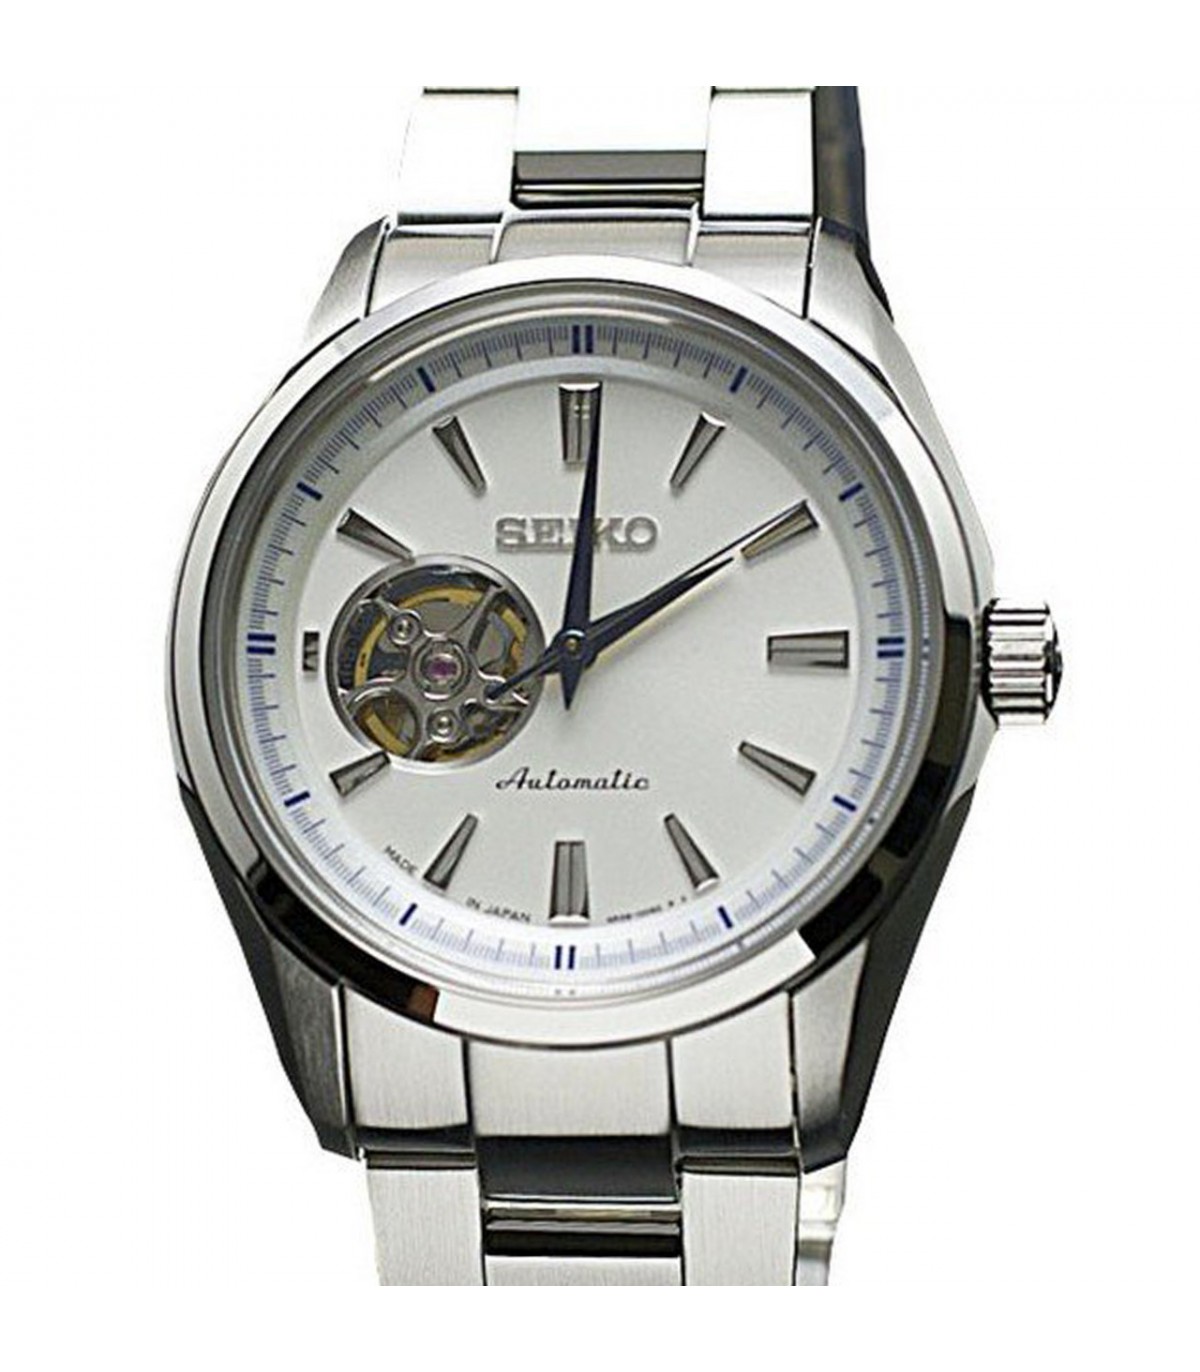 Defectuoso oro para jugar Seiko Presage SARY051 JDM 41mm sapphire crystal 100m WR automatic men's  watch stainless steel bracelet white dial